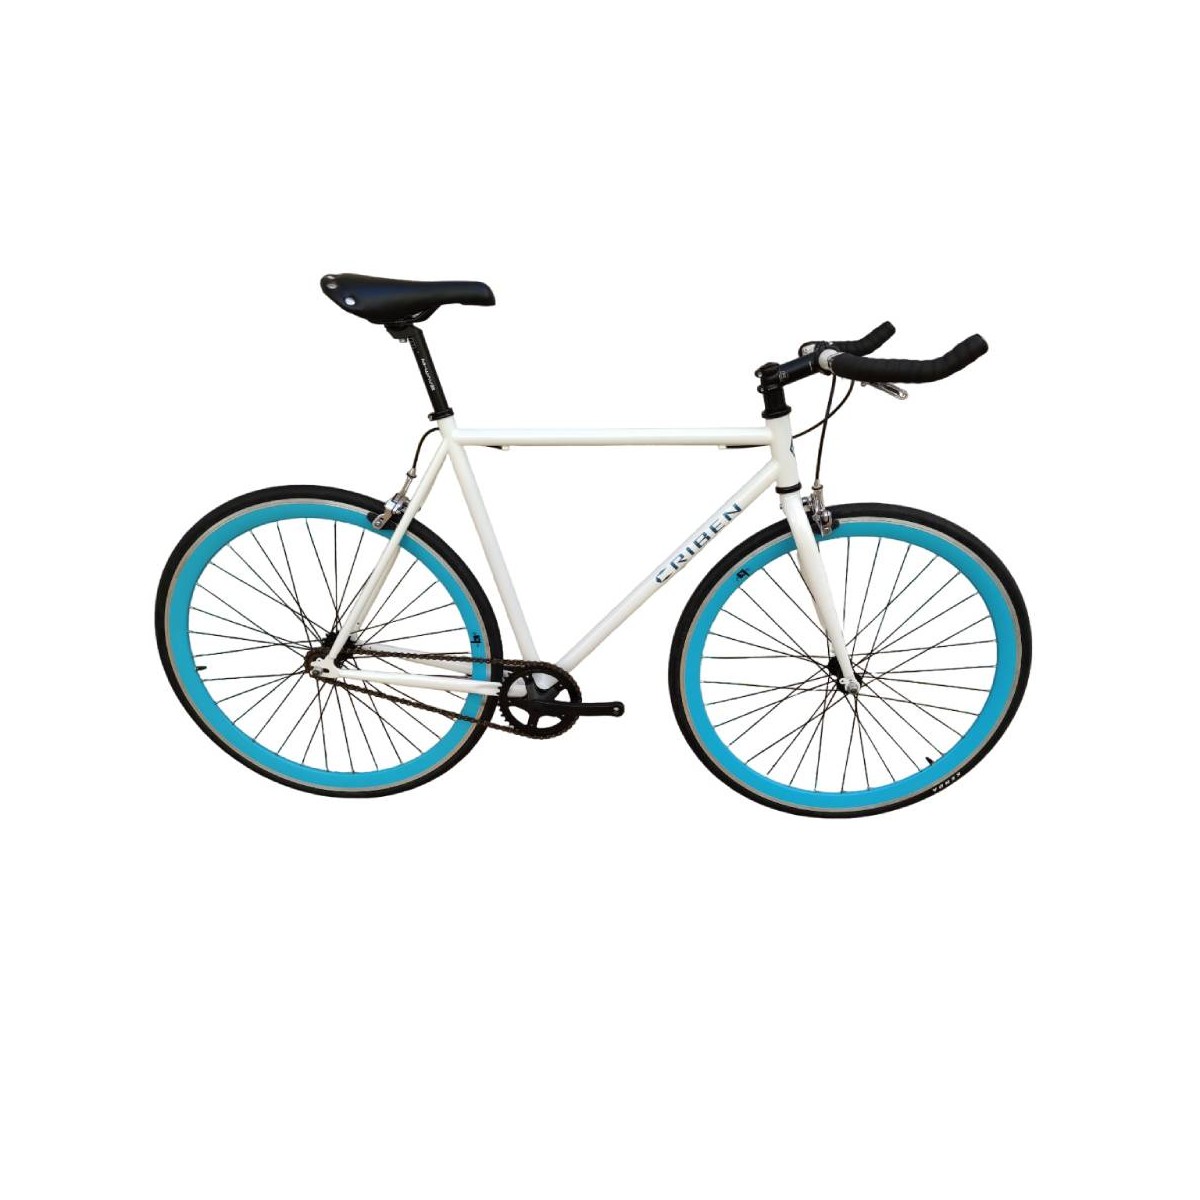 Bicicleta fixie blanca Criben y ruedas perfil